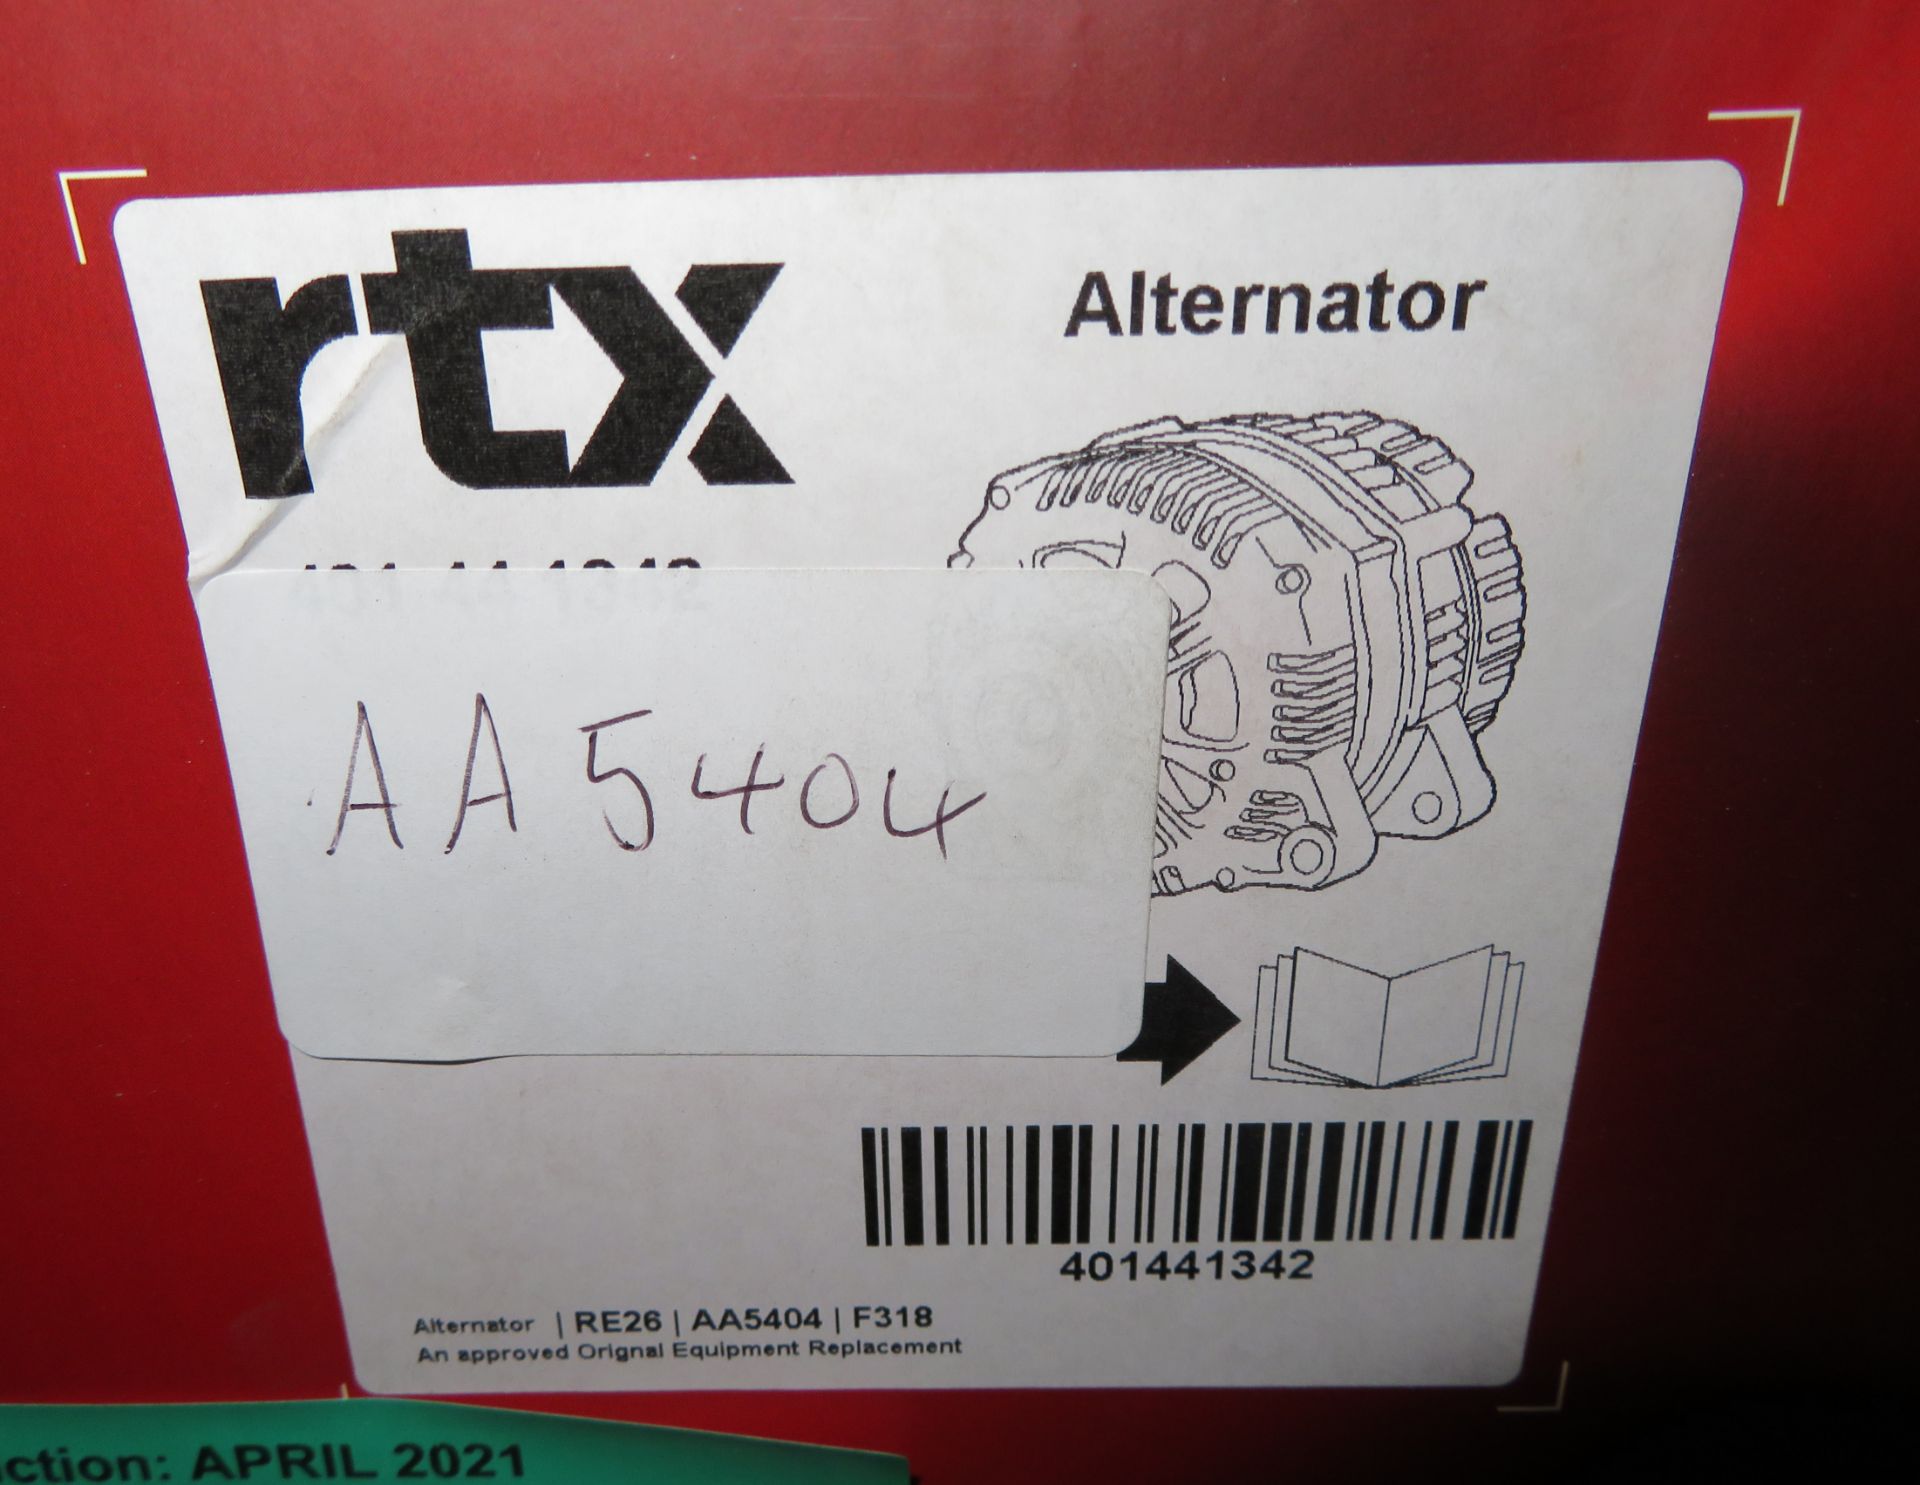 RTX alternator - AA5404 - Image 2 of 2